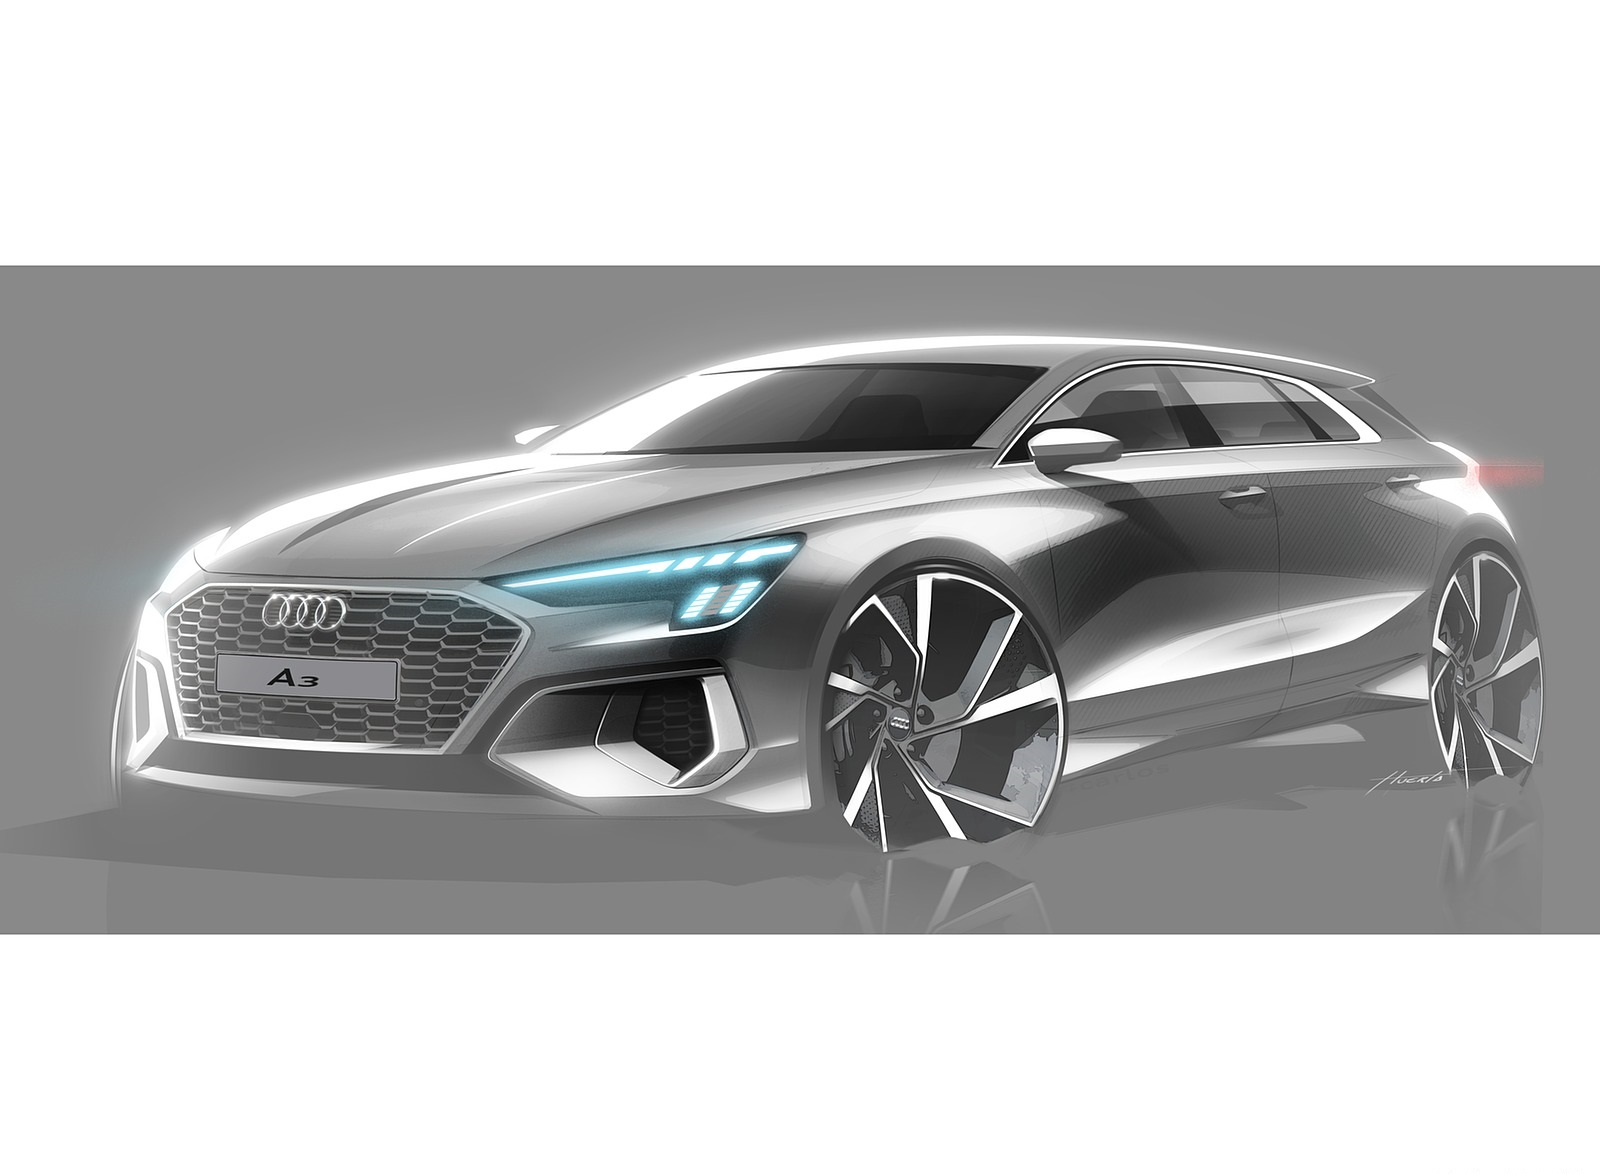 2021 Audi A3 Sportback Design Sketch Wallpapers #113 of 121